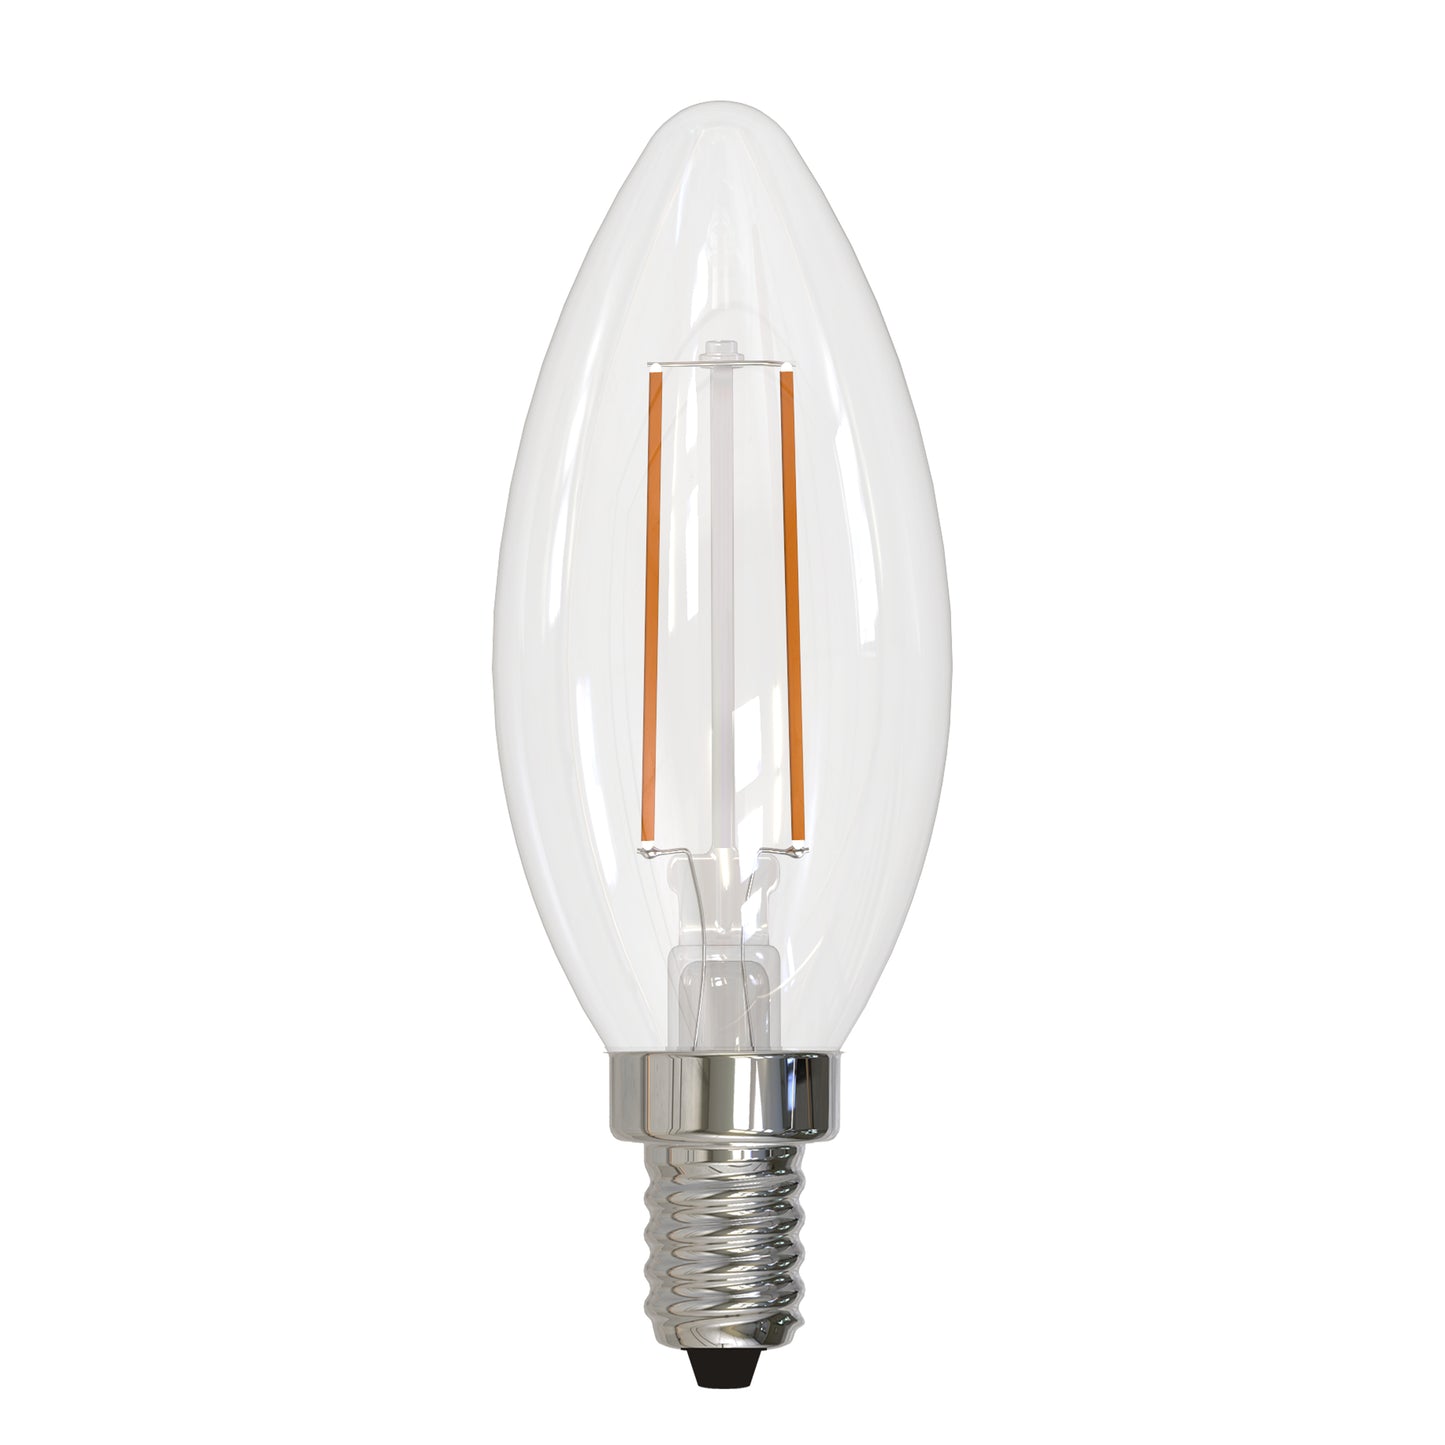 Bulbrite LED 4W Filament B11 Dimmable Candelabra Screw Base (E12) Light Bulb (40 Watt Equivalent) 2700K, Clear